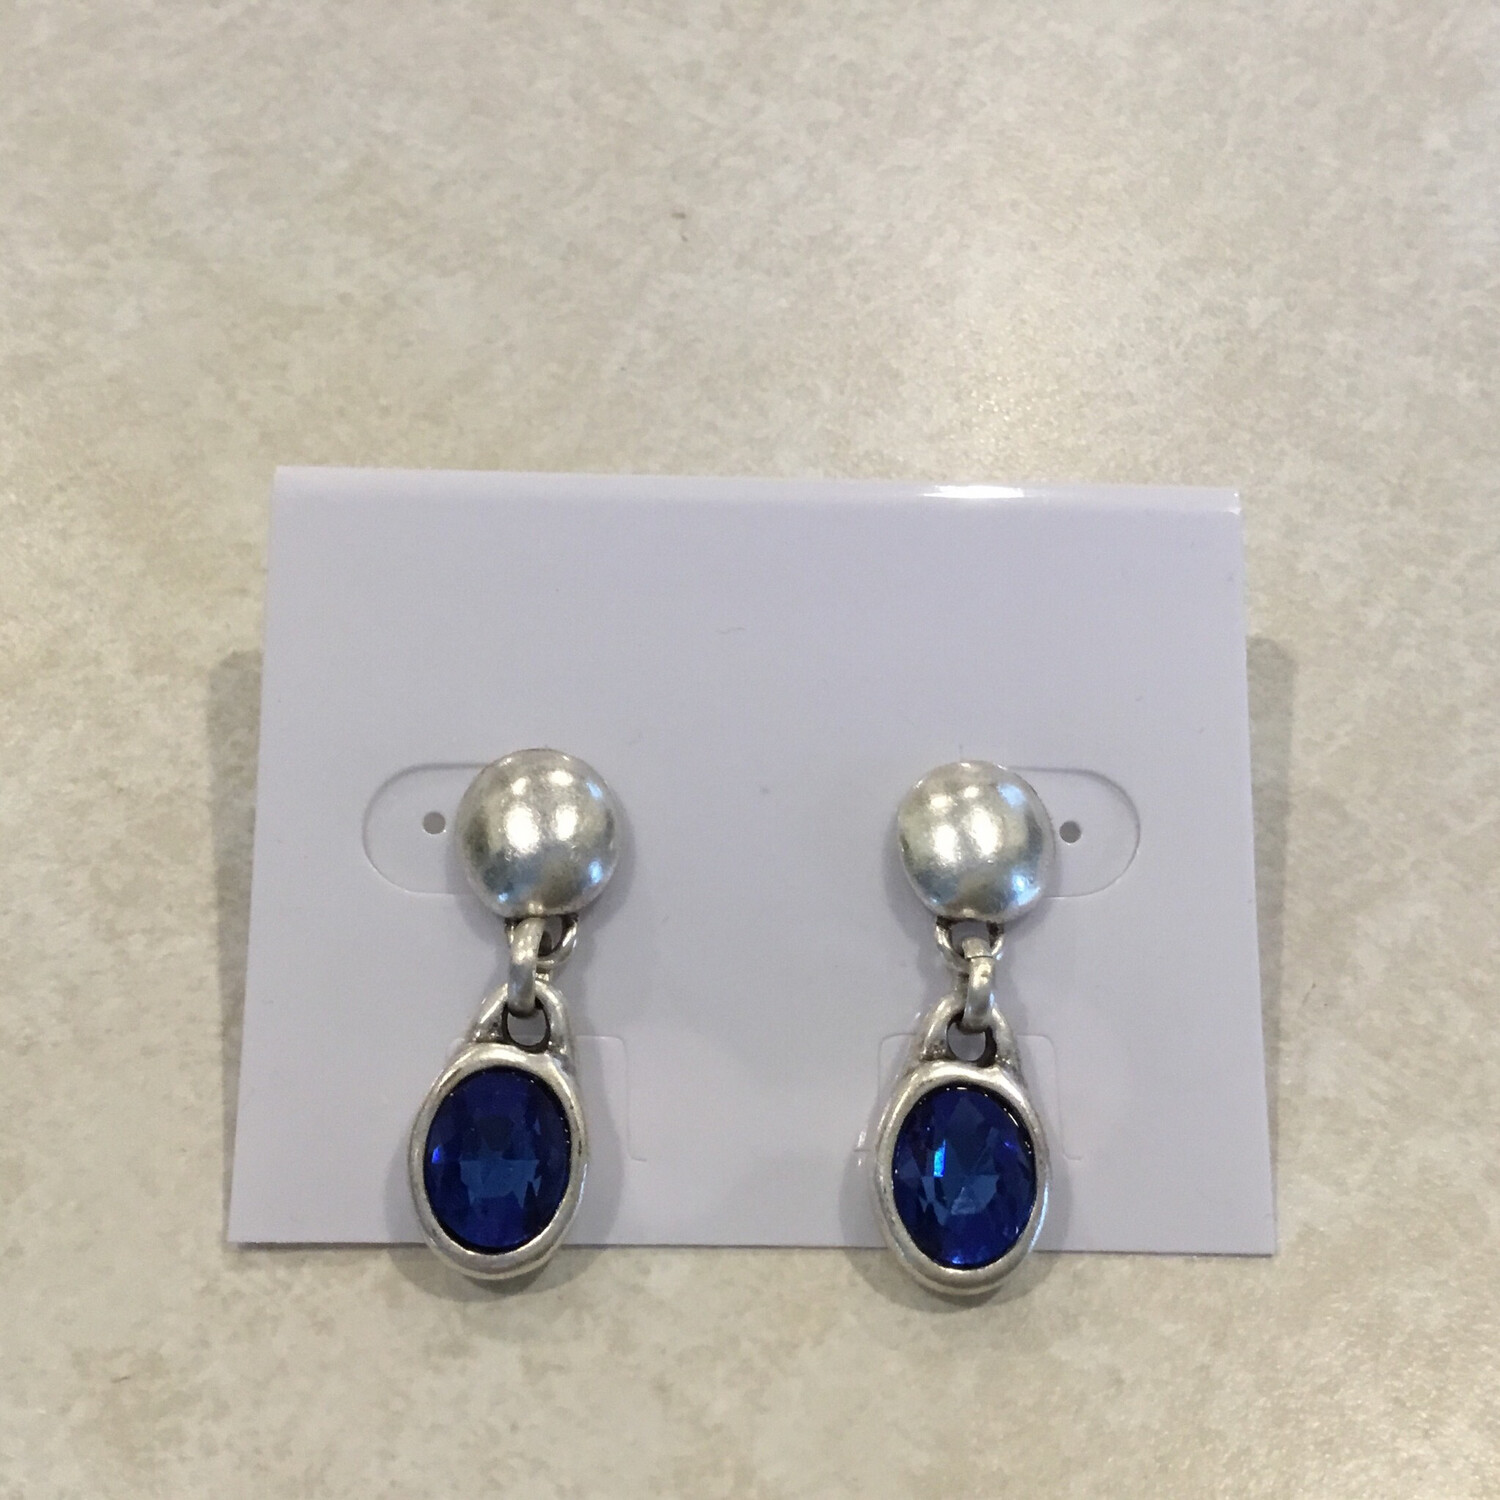 Handmade Pewter Earrings With Blue Crystal 1575